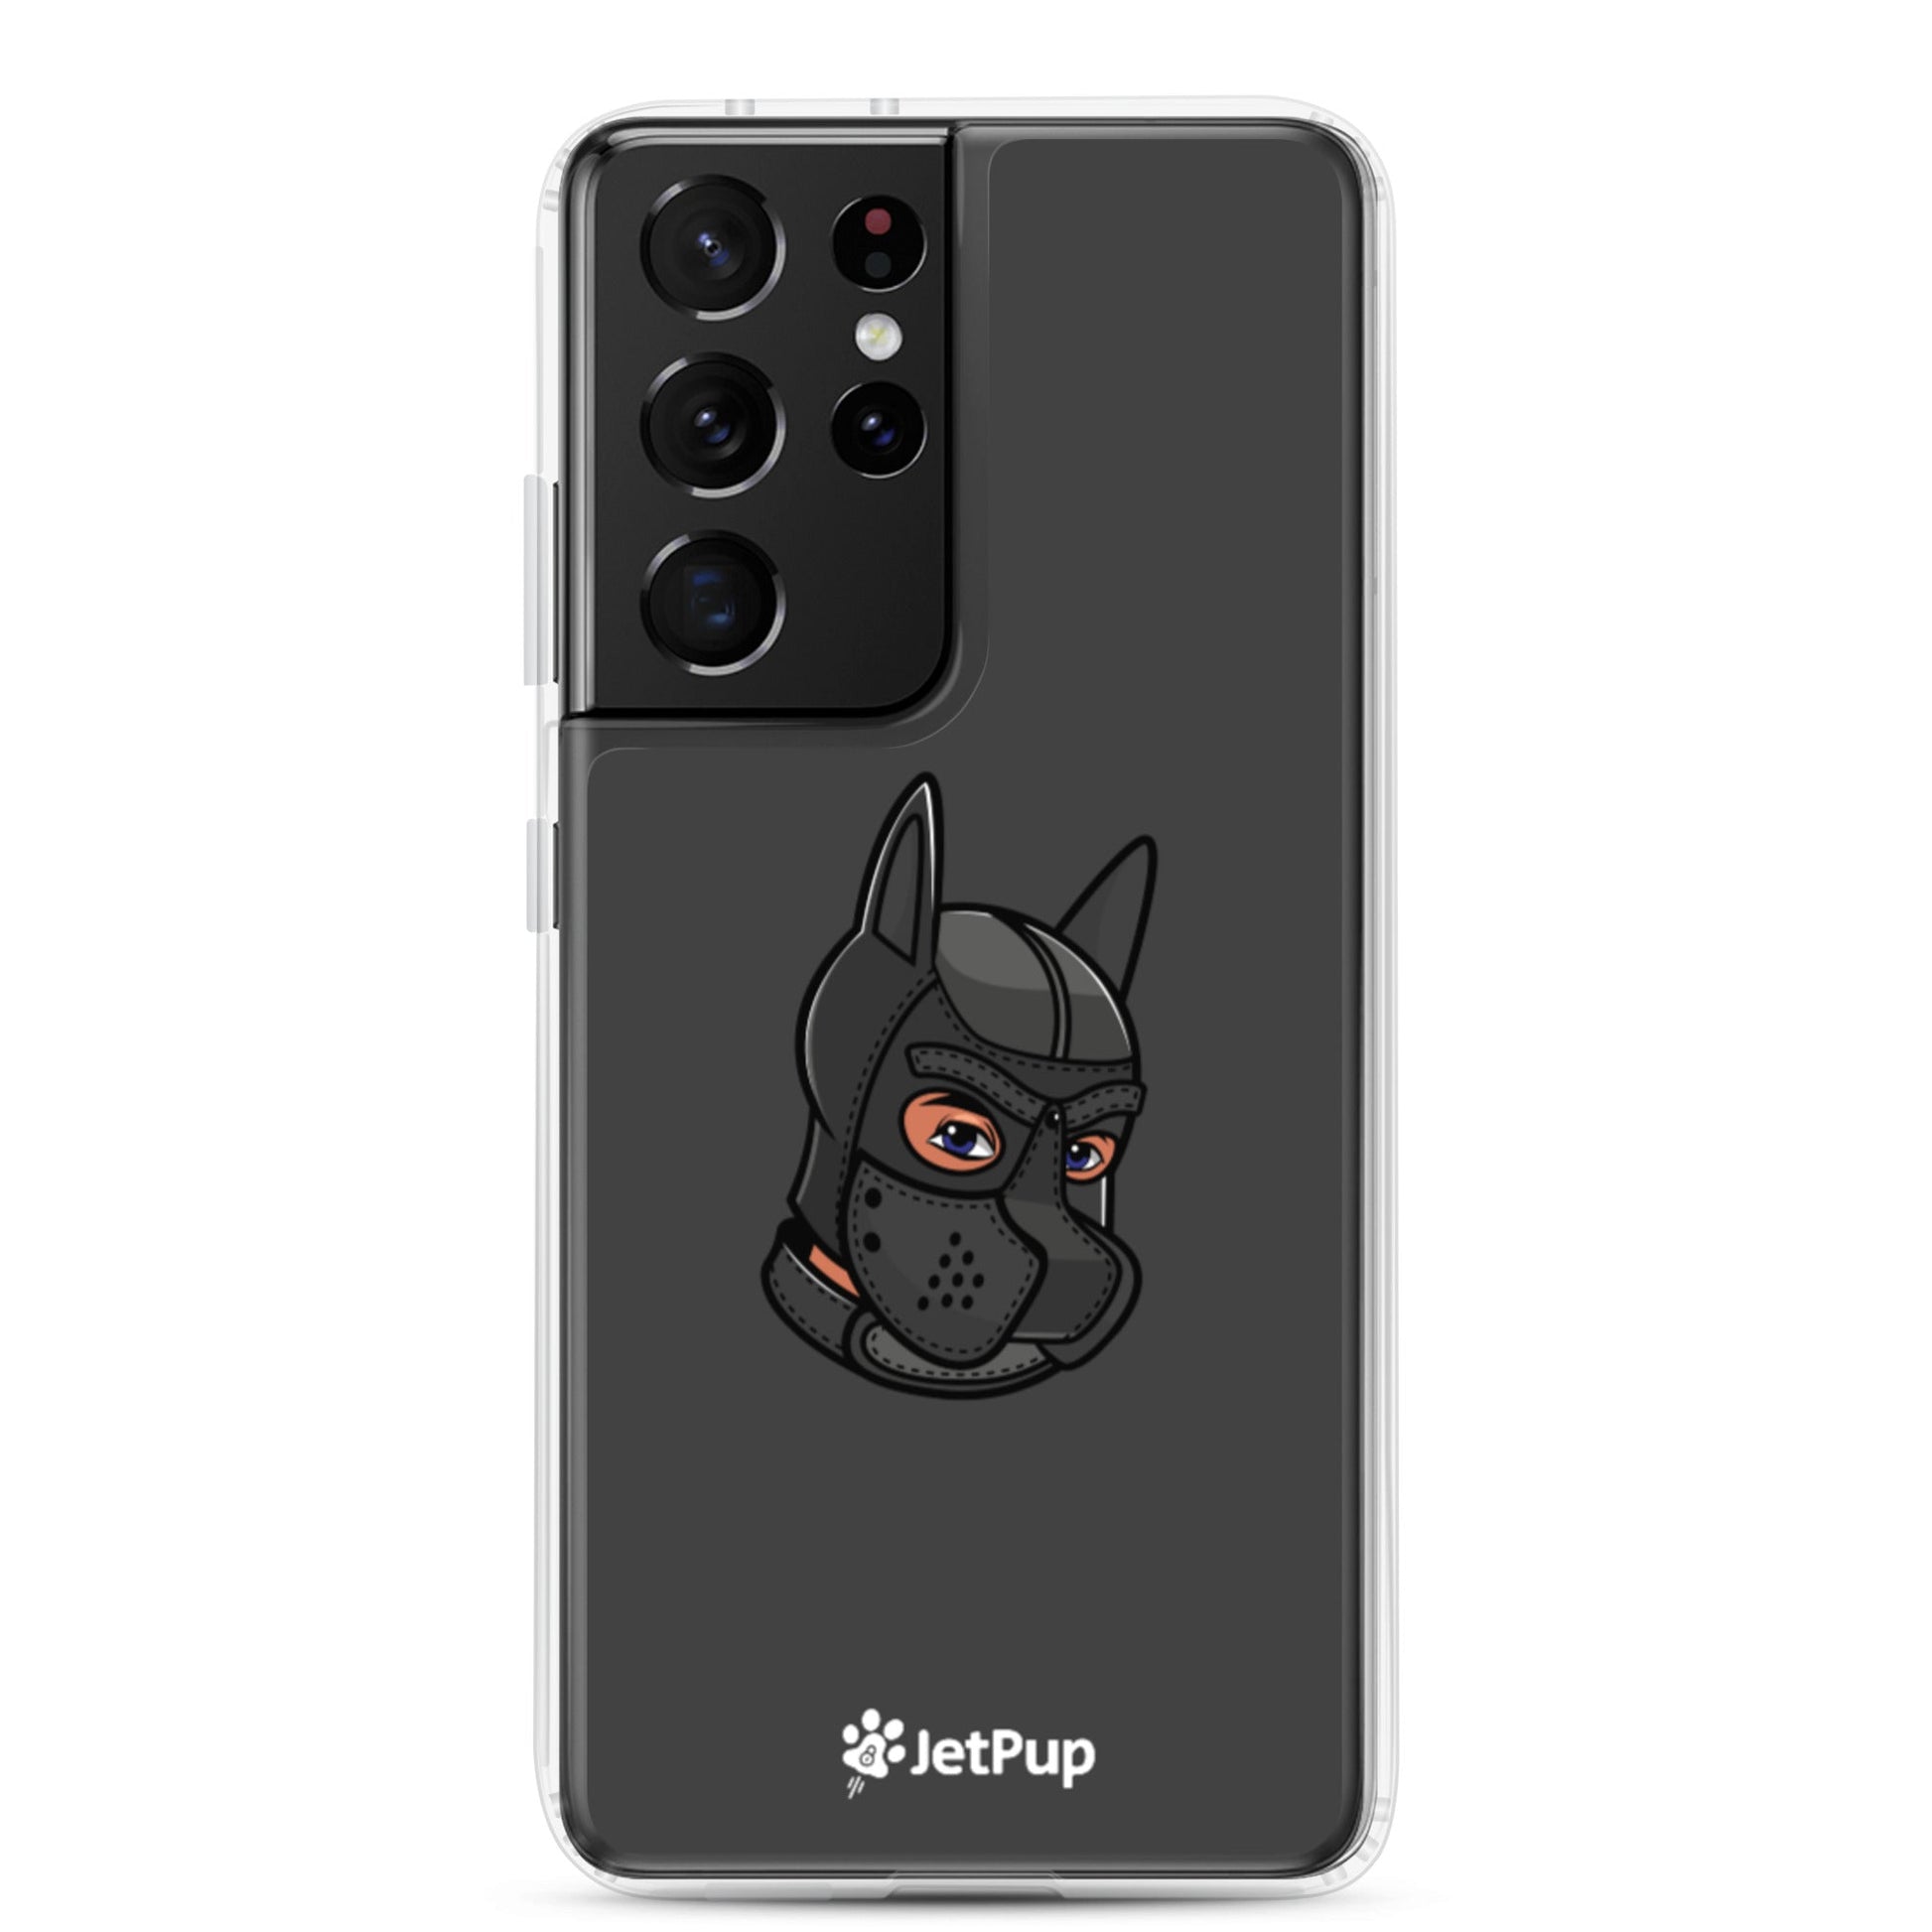 Pup Samsung Case - Dark Grey - JetPup